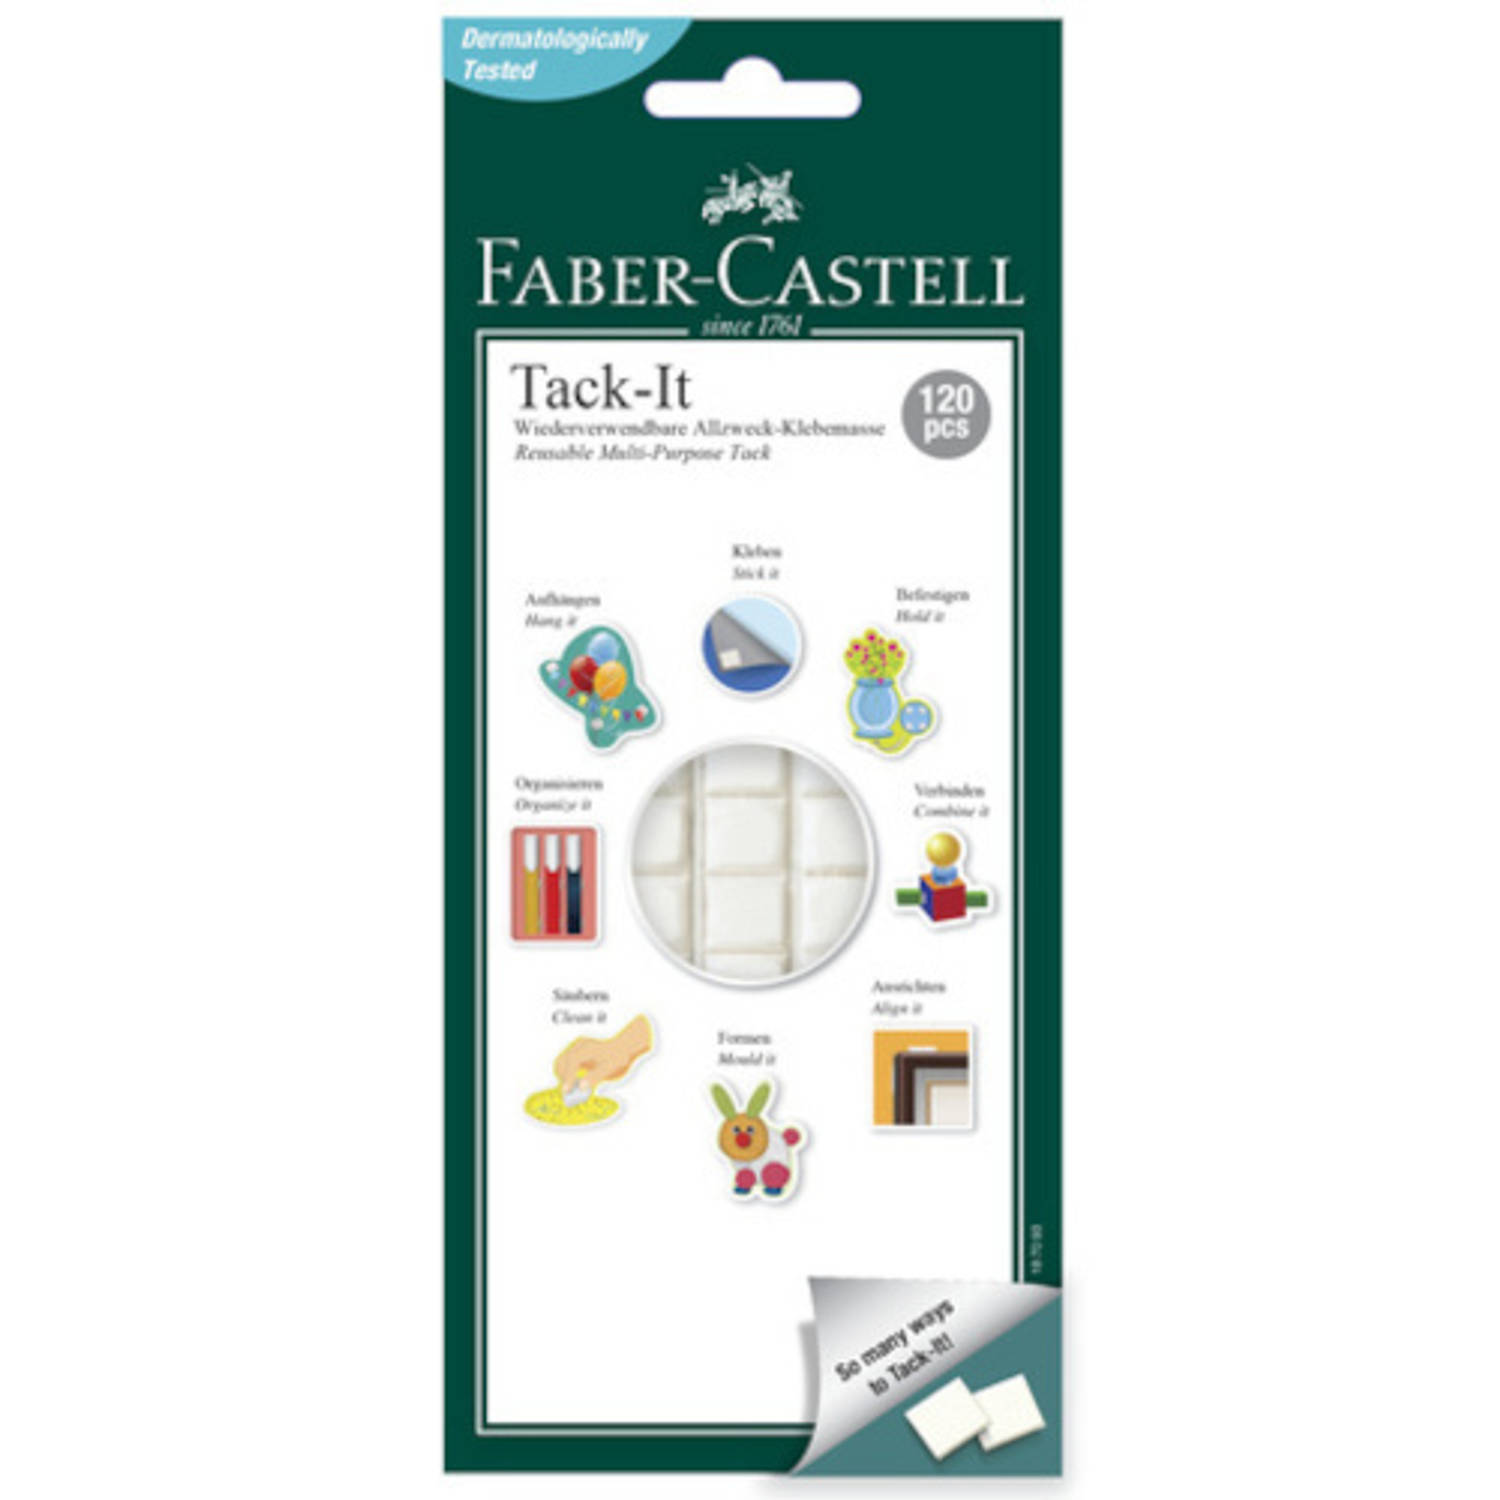 Faber-Castell Tack-it kleefpads - 120 stuks - FC-187093